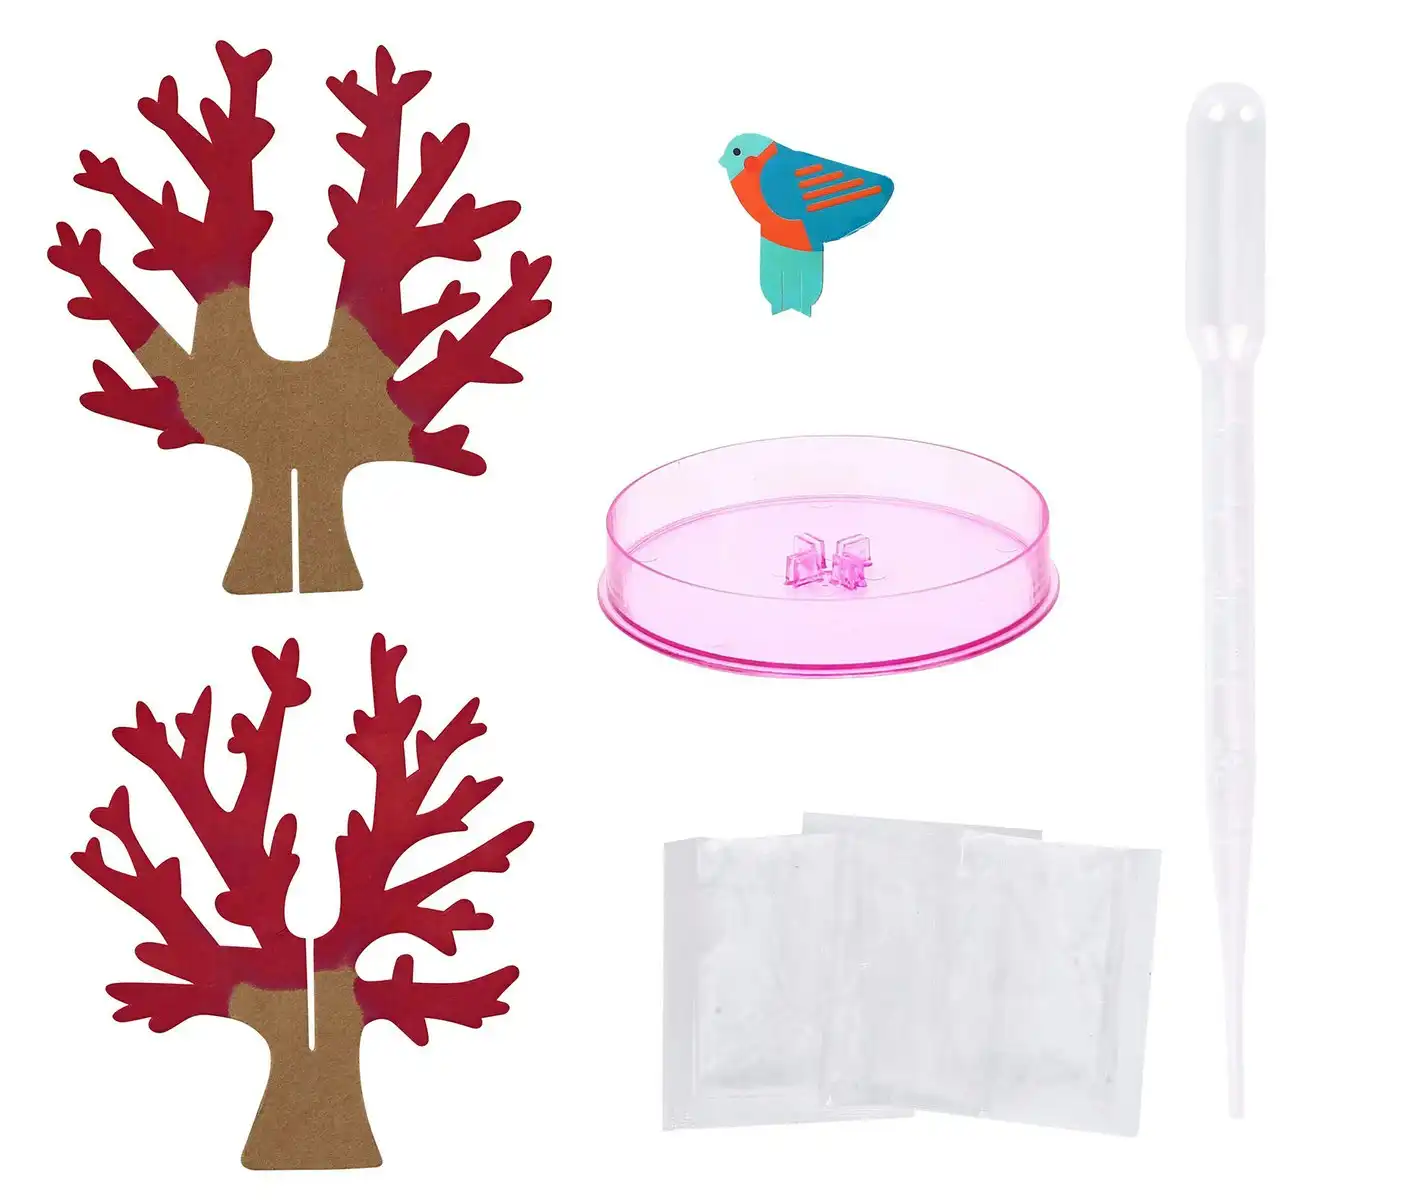 Tookyland Magic Growing Sakura Cherry Blossom Tree Art/Craft Activity Toy 3y+